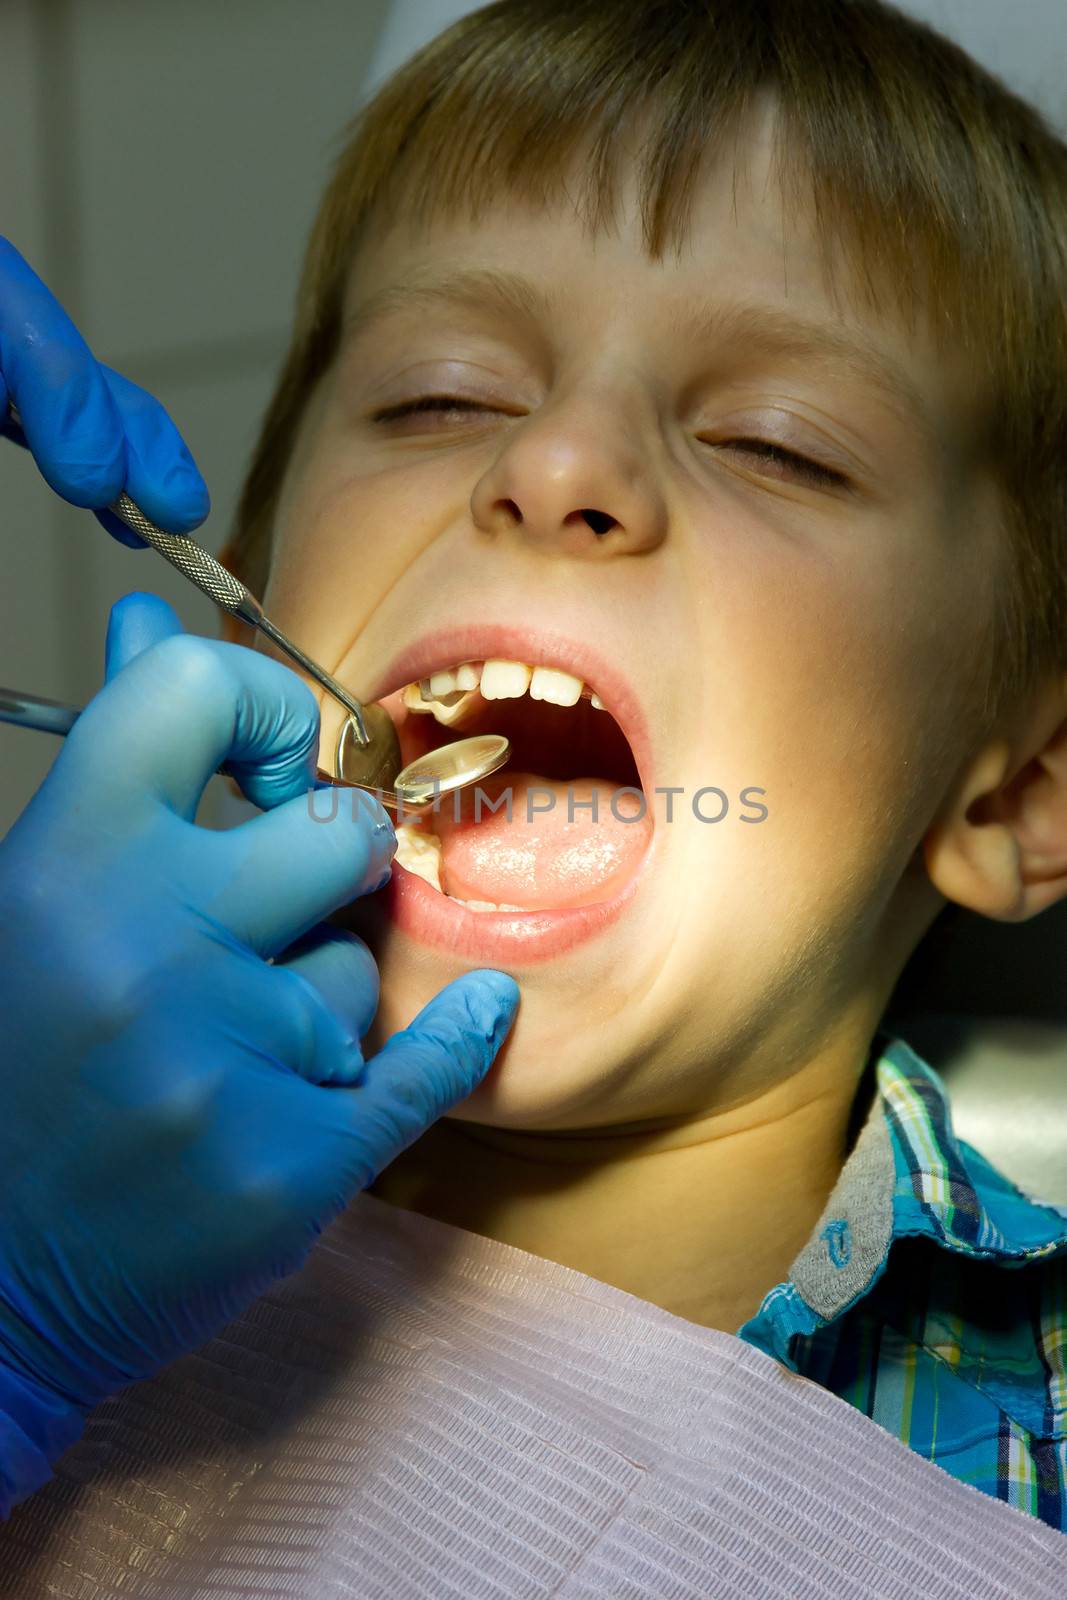 boy on reception at the dentist by victosha